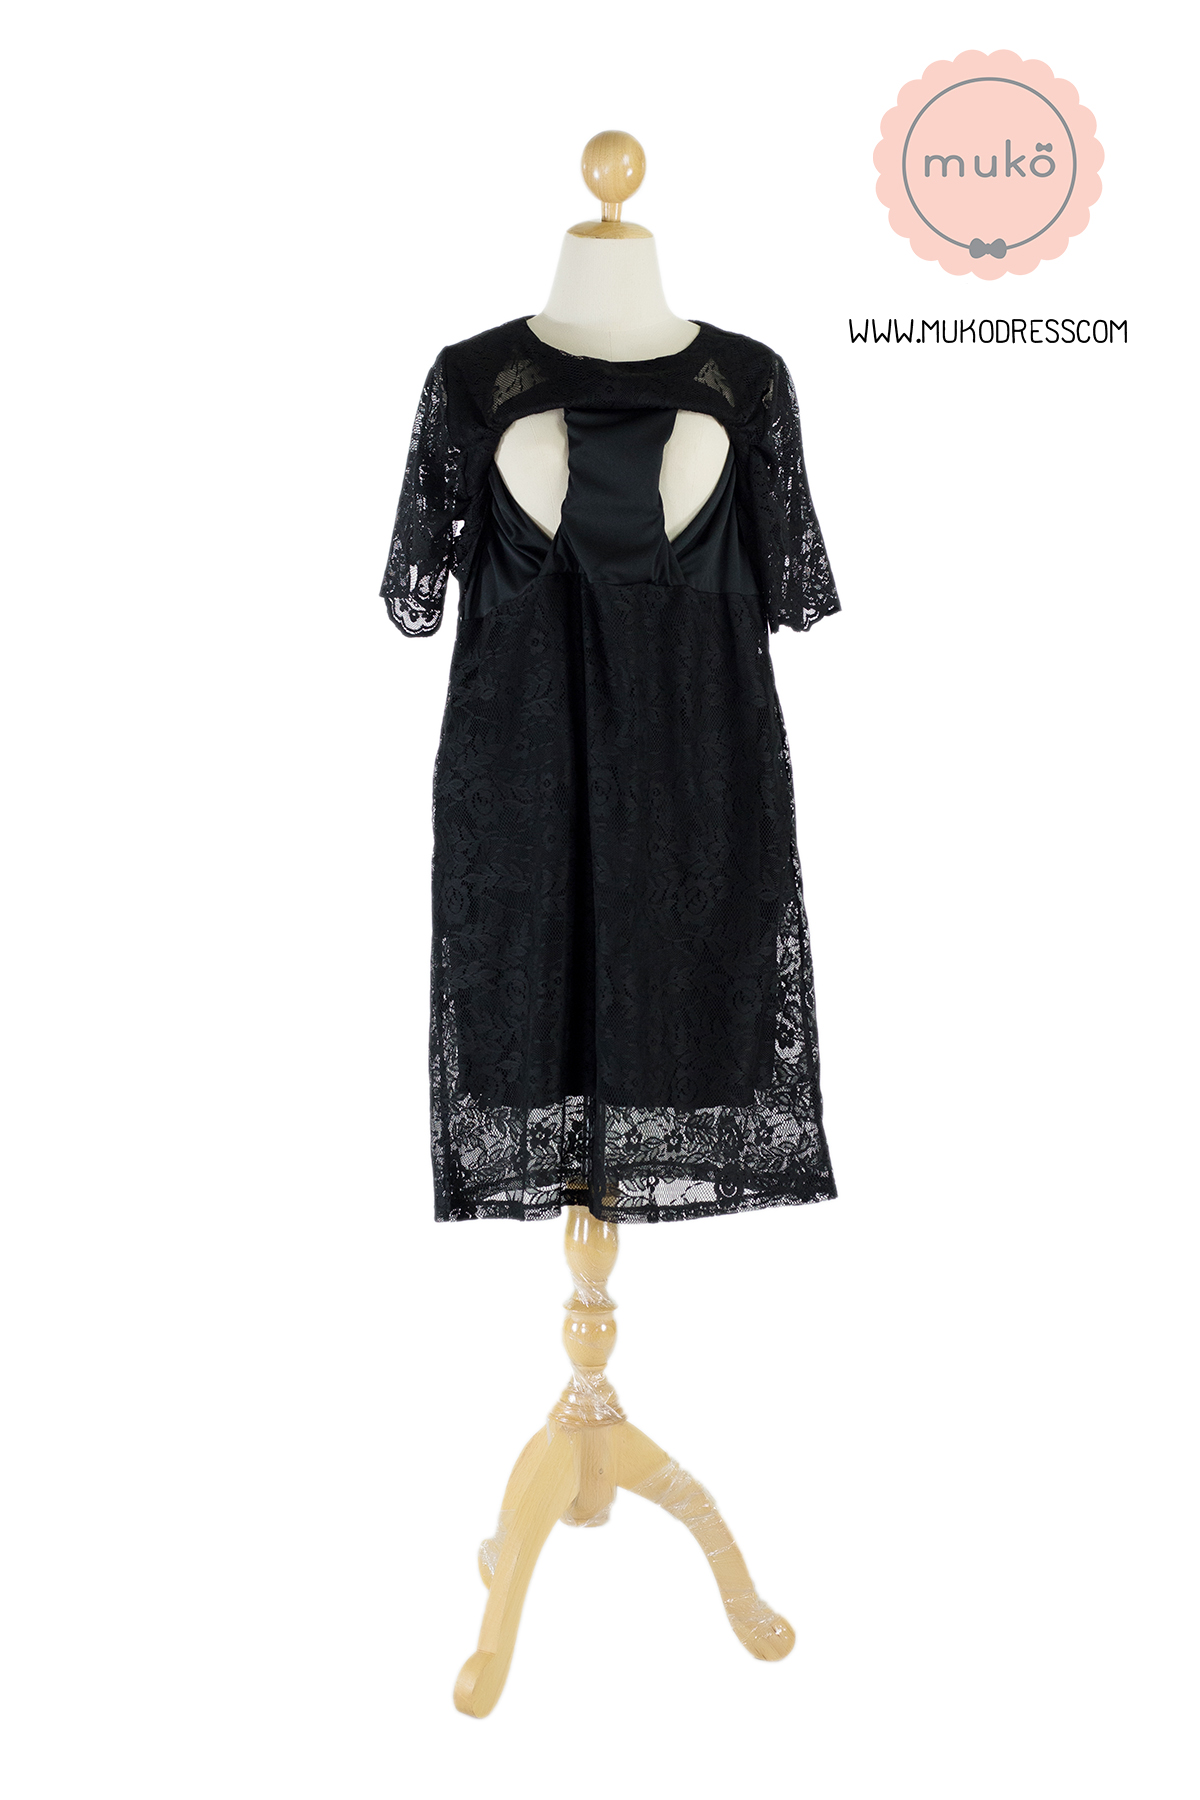 Muko Rosie Lace Dress เดรสเปิดให้นม คลุมท้อง DZ23-004 สีดำ